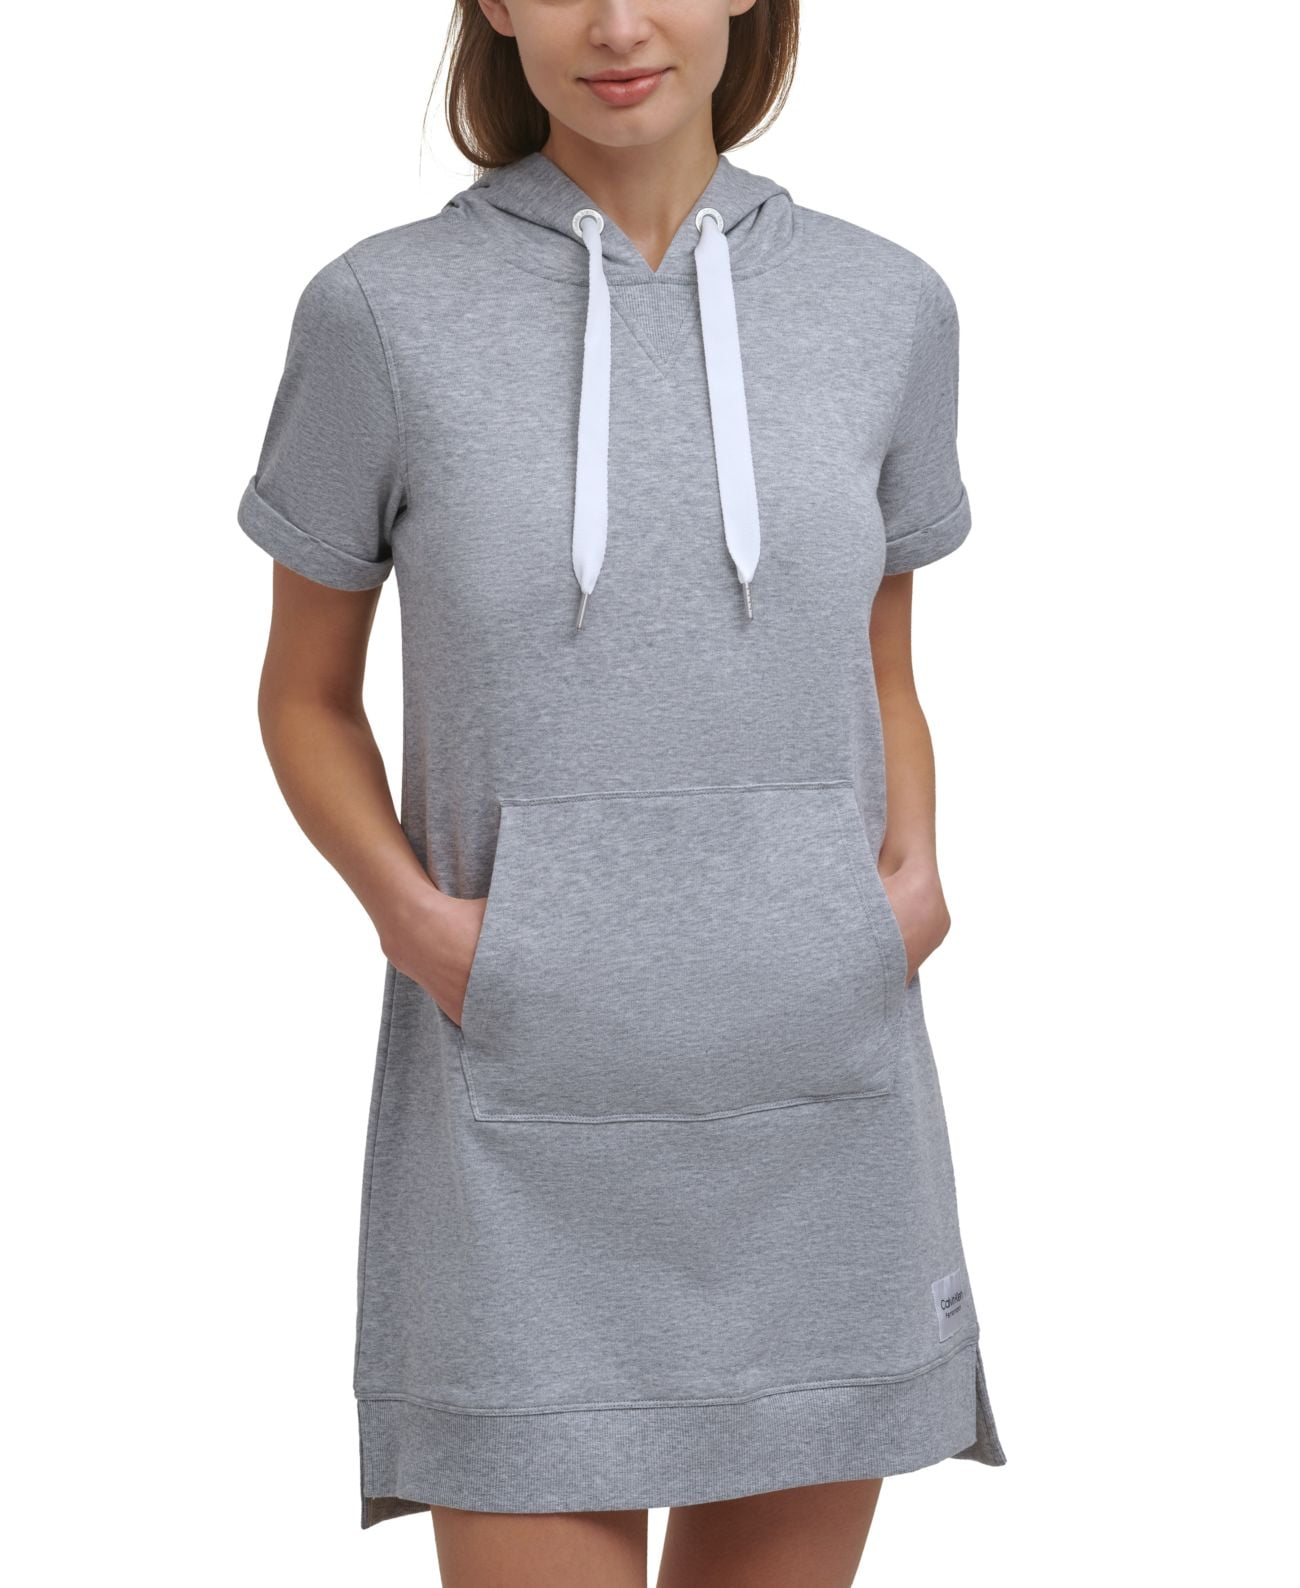 vervolgens patroon compressie Calvin Klein Performance Women's Hooded Sweatshirt Dress, Grey, X-Large -  Walmart.com